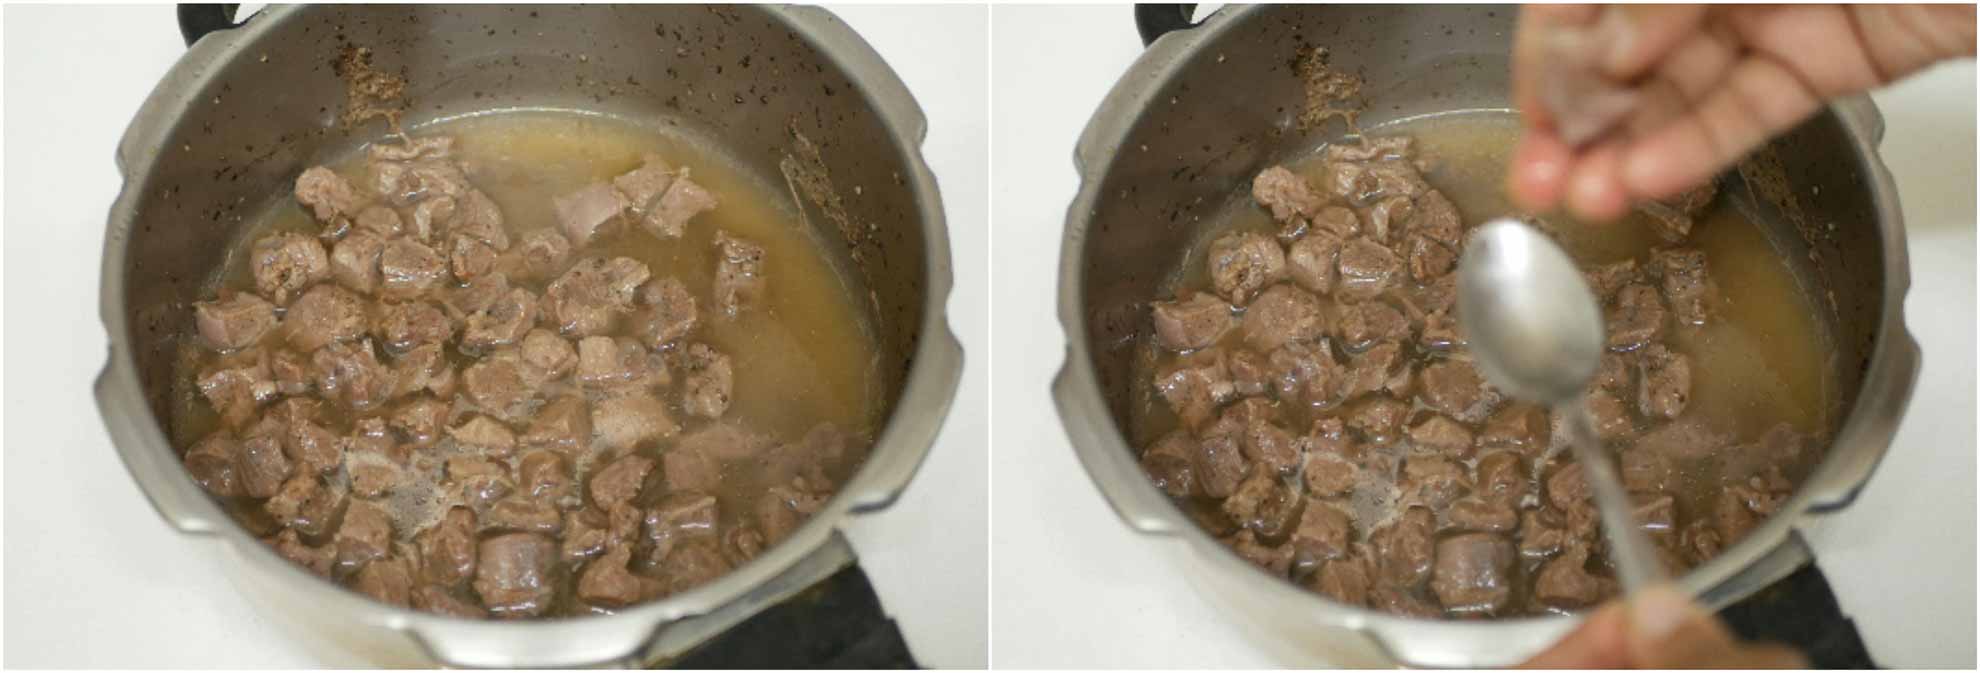 kerala-mutton-stew-recipe-for-appam-2